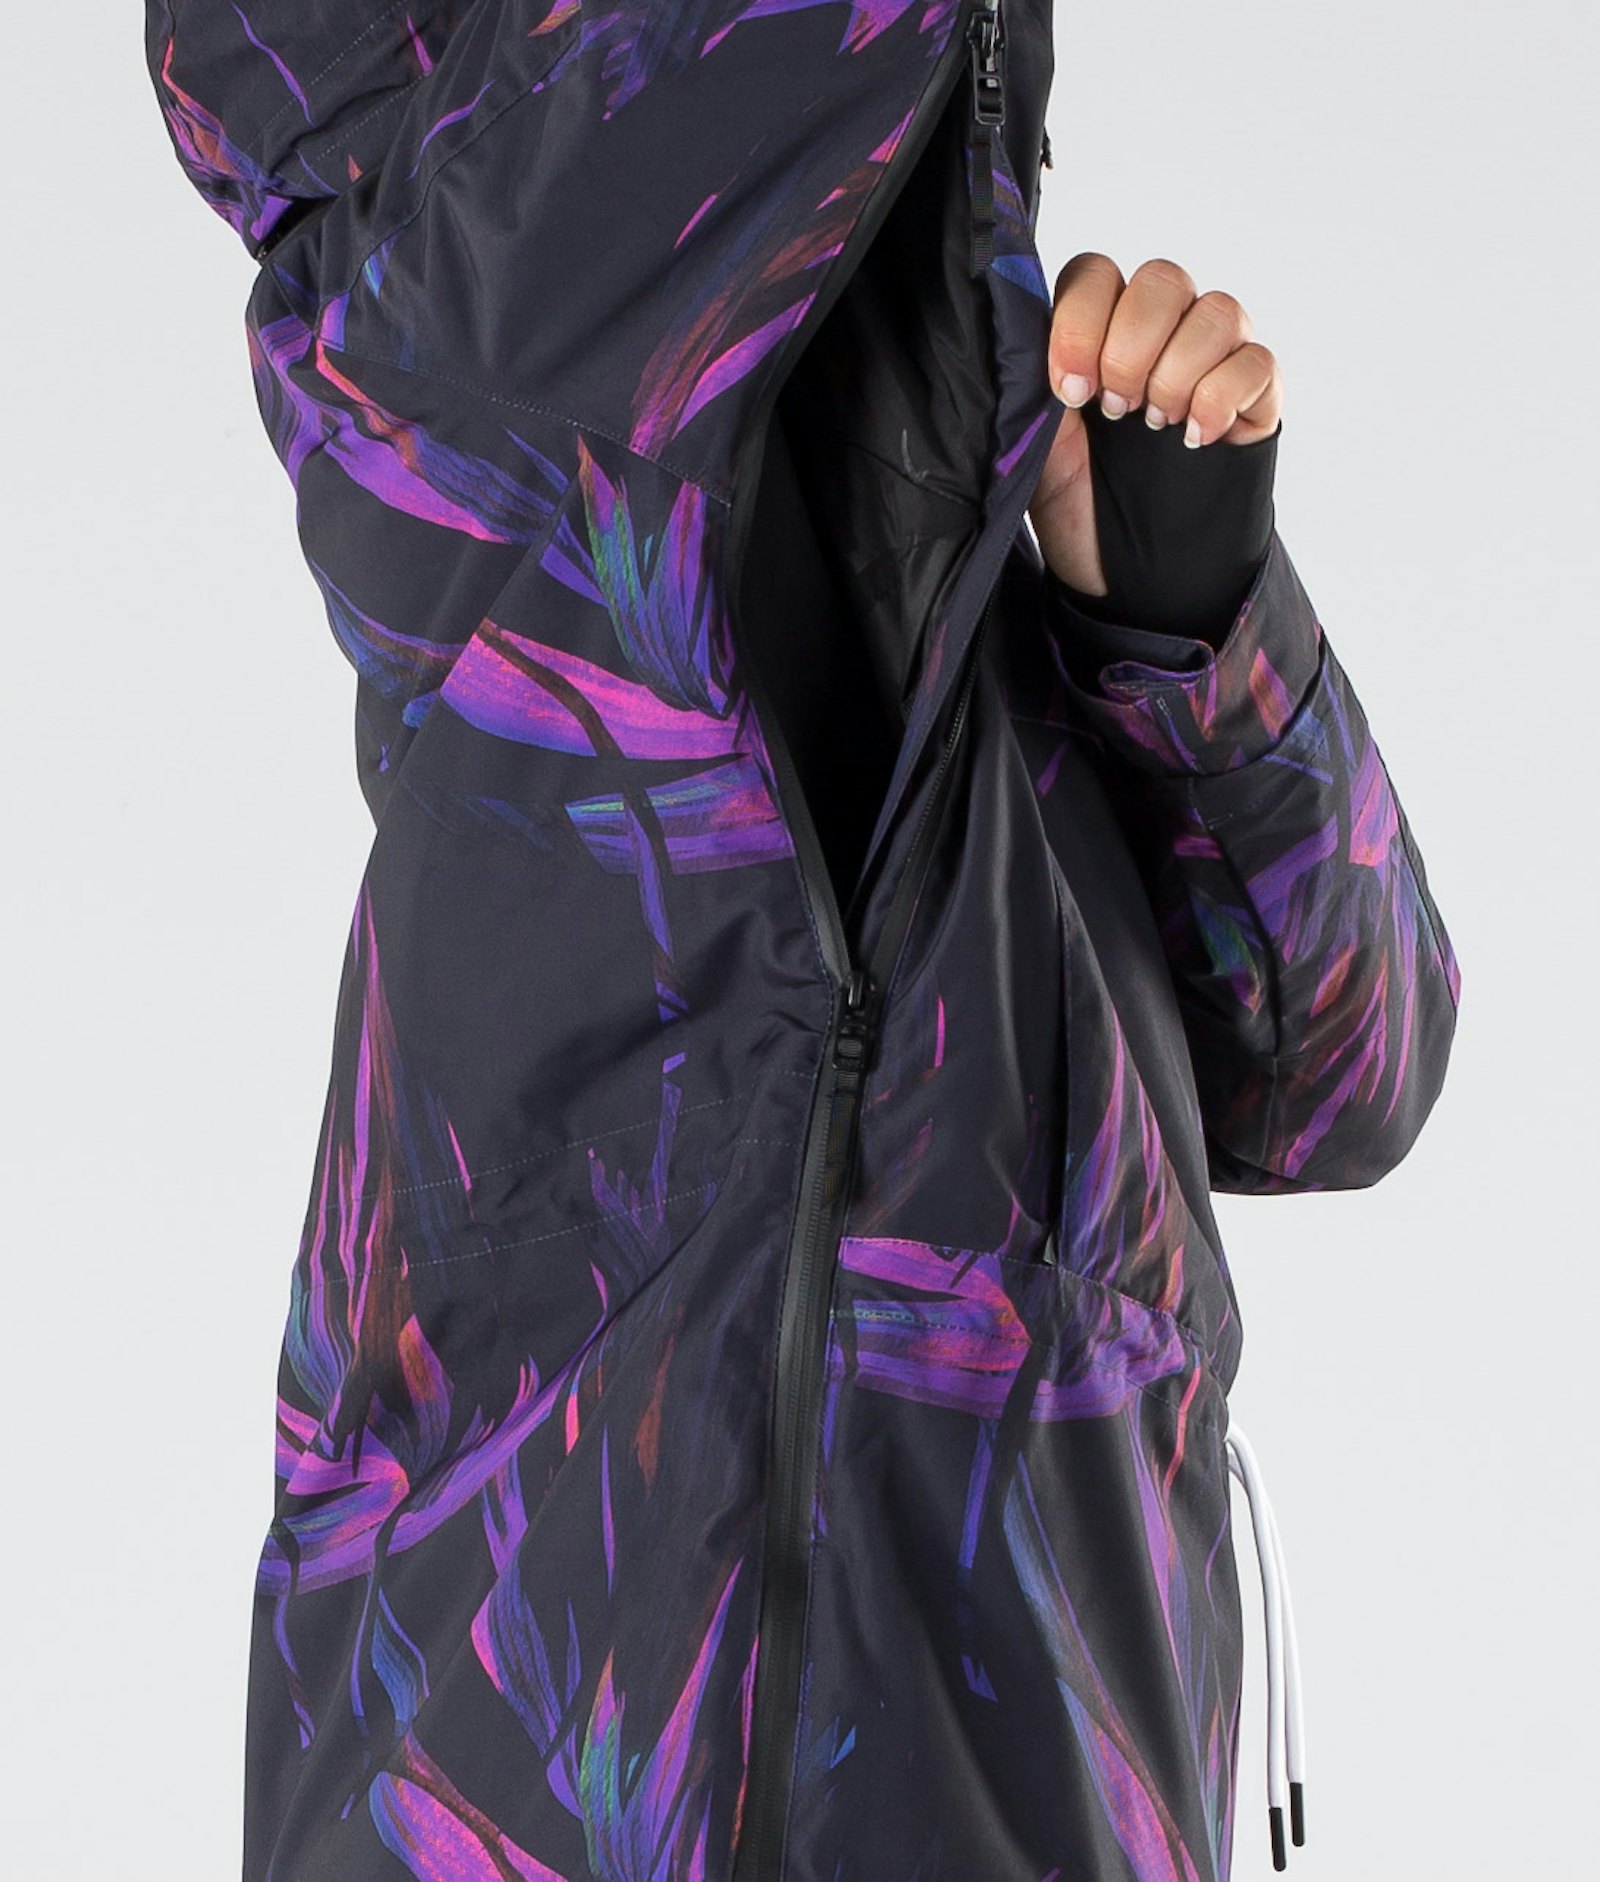 Dope Annok W 2019 Veste Snowboard Femme Purple Foliage